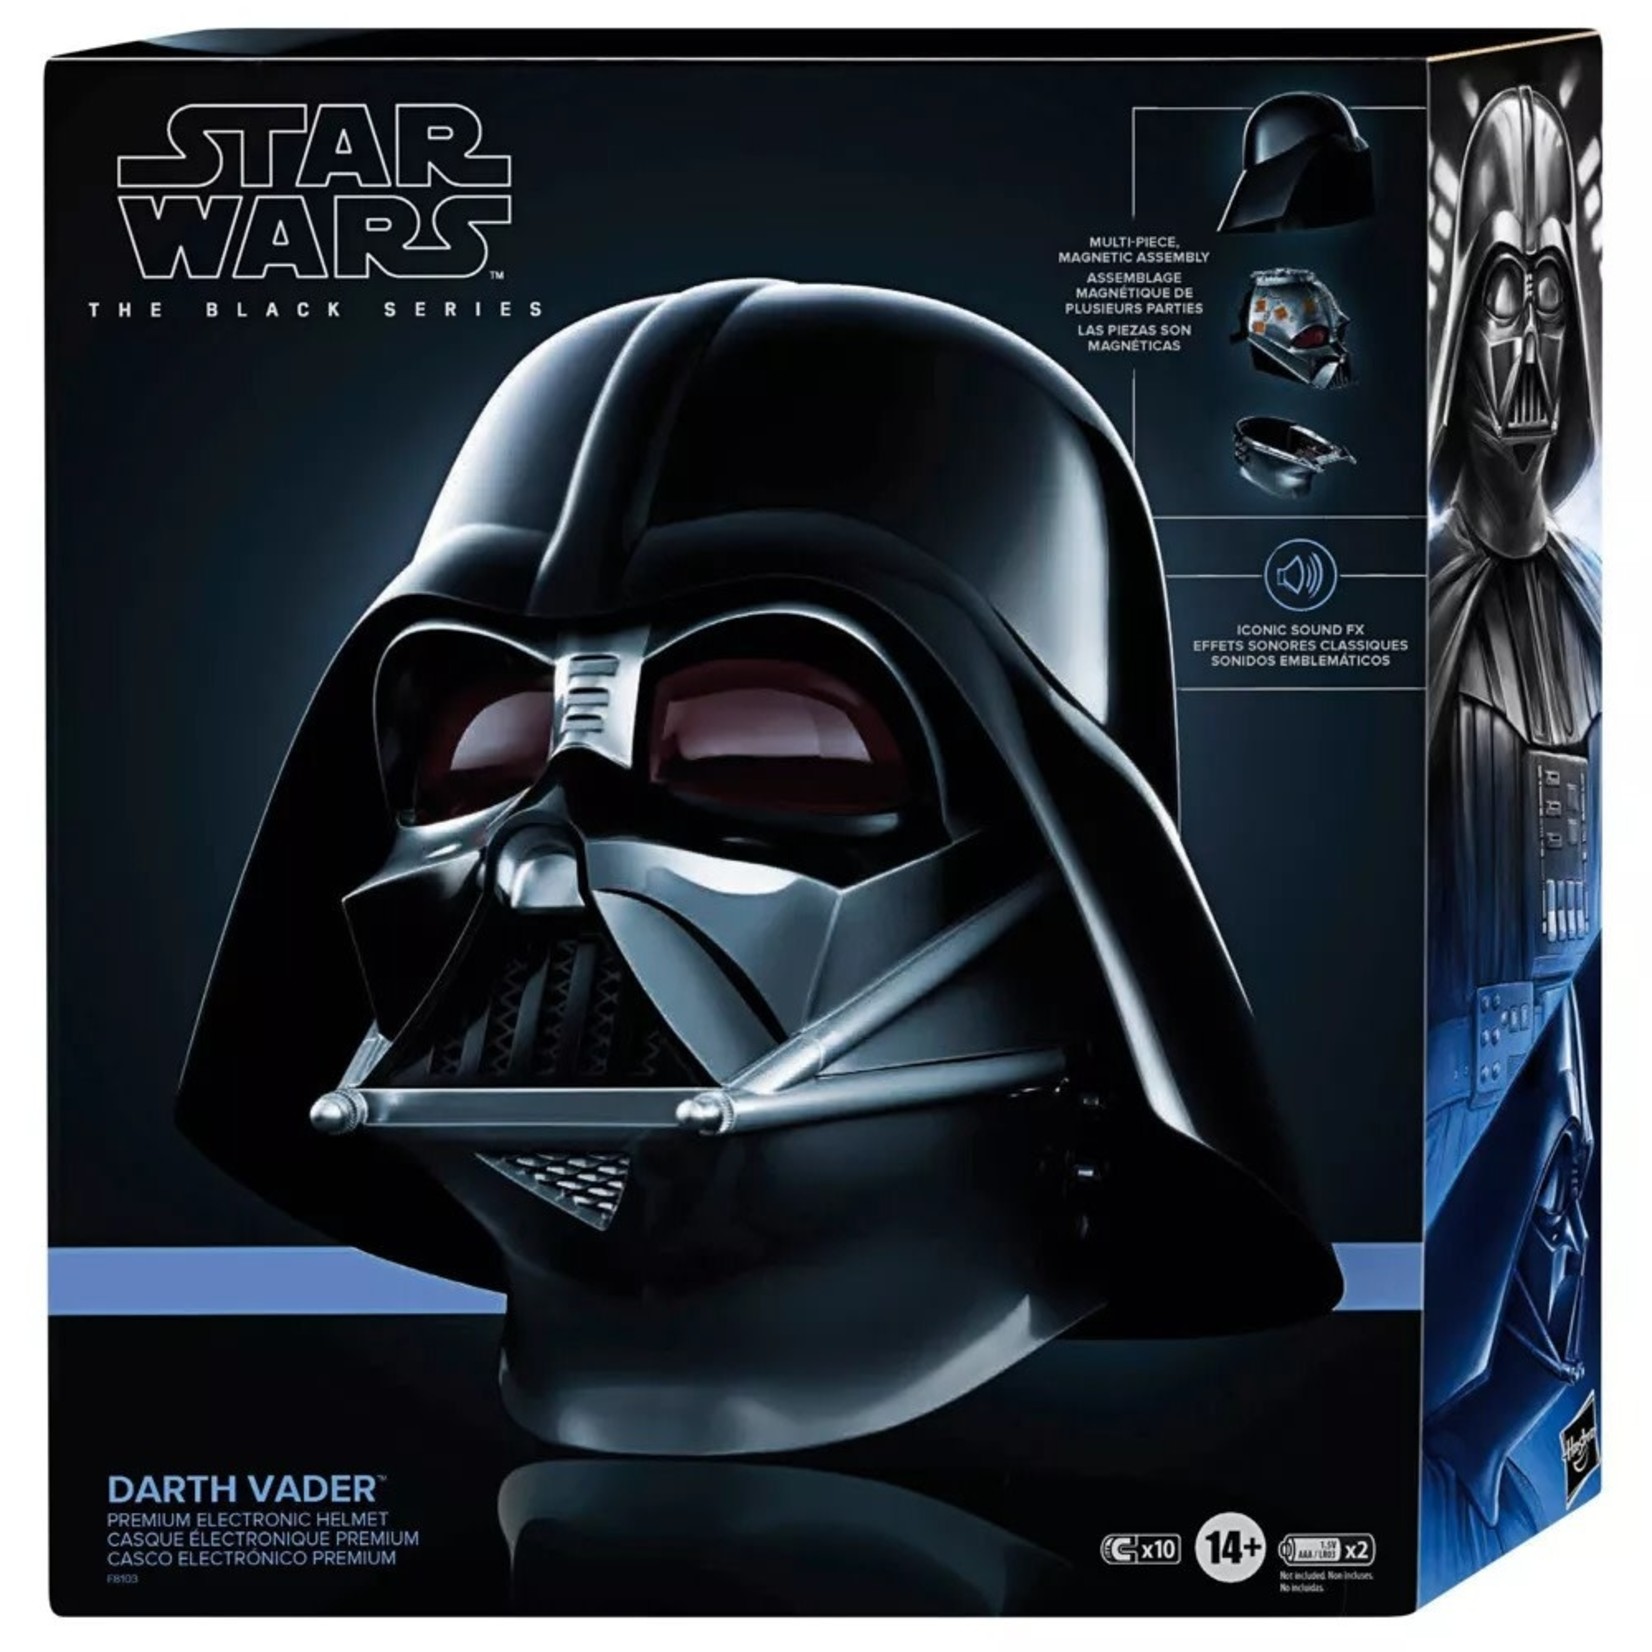 Star Wars The Black Series Star Wars The Black Series Darth Vader Premium Electronic Helmet